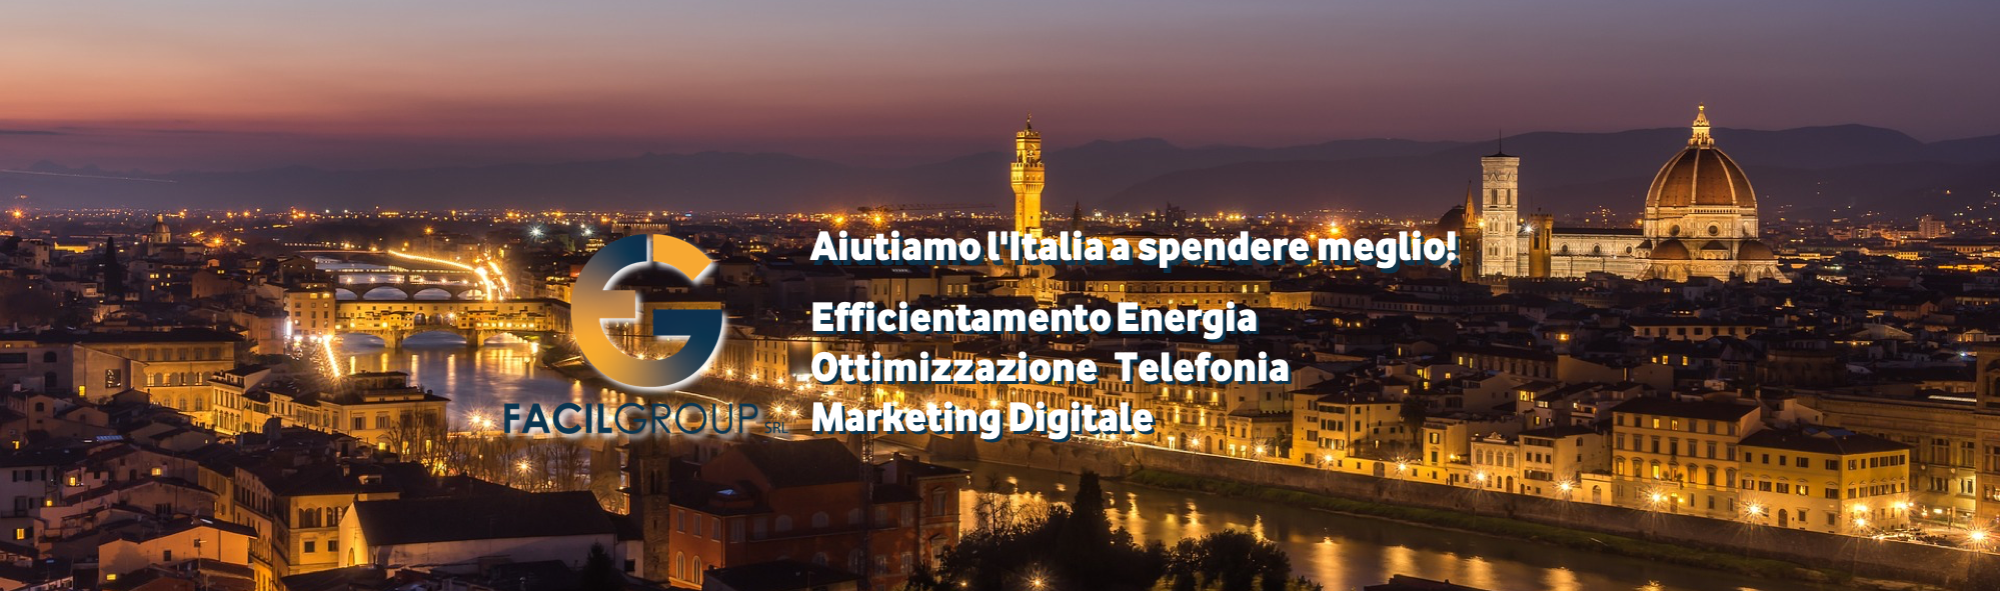 Facil Group spendere meglio Luce Gas Telefonia e Digital Marketing